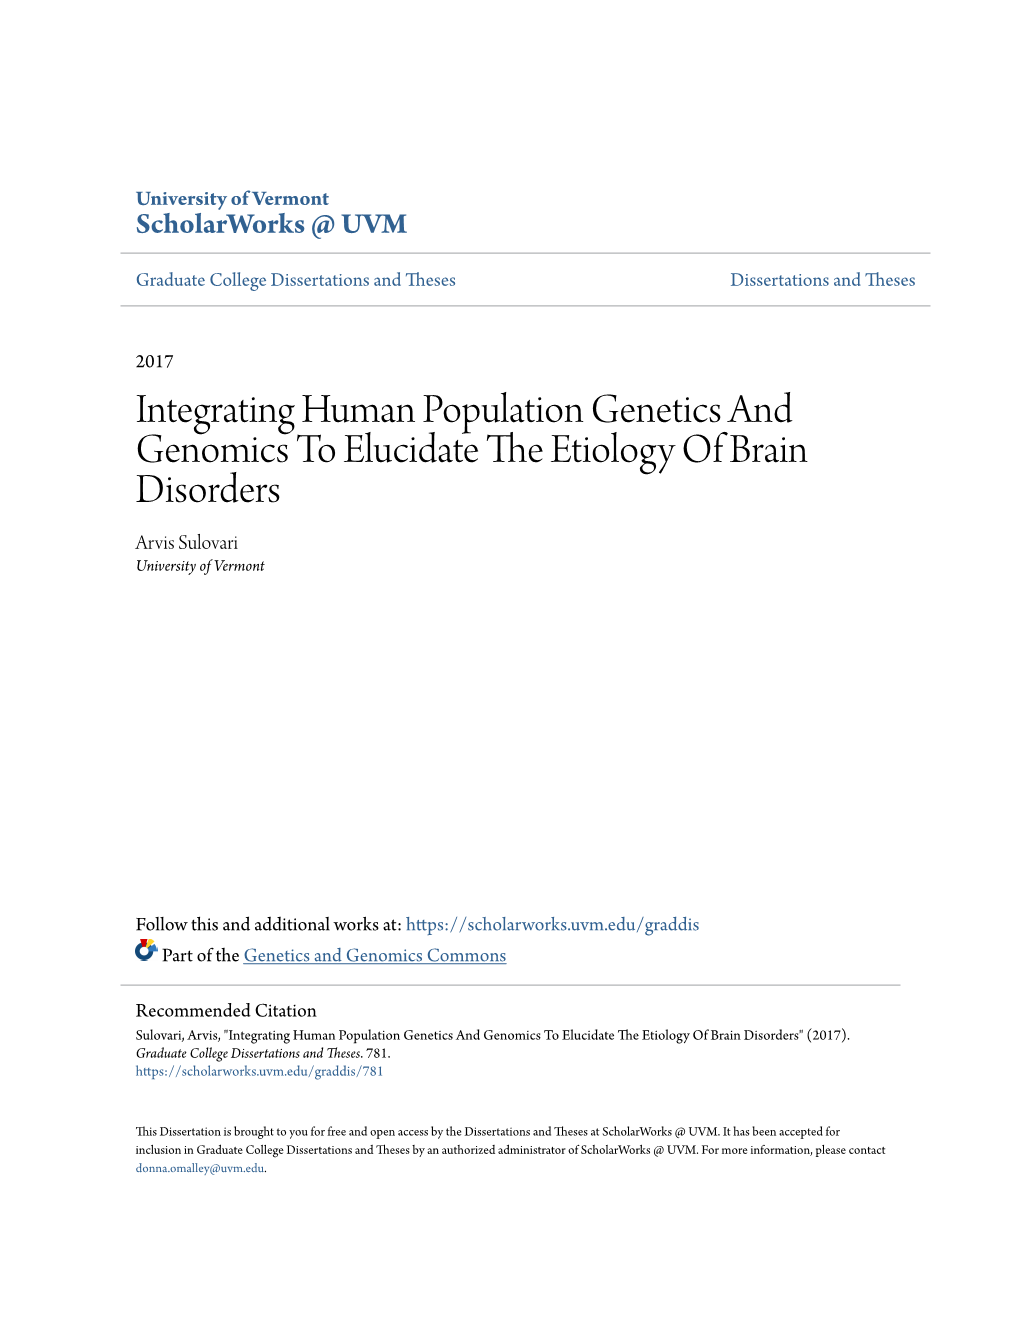 Integrating Human Population Genetics and Genomics to Elucidate the Etiology of Brain Disorders